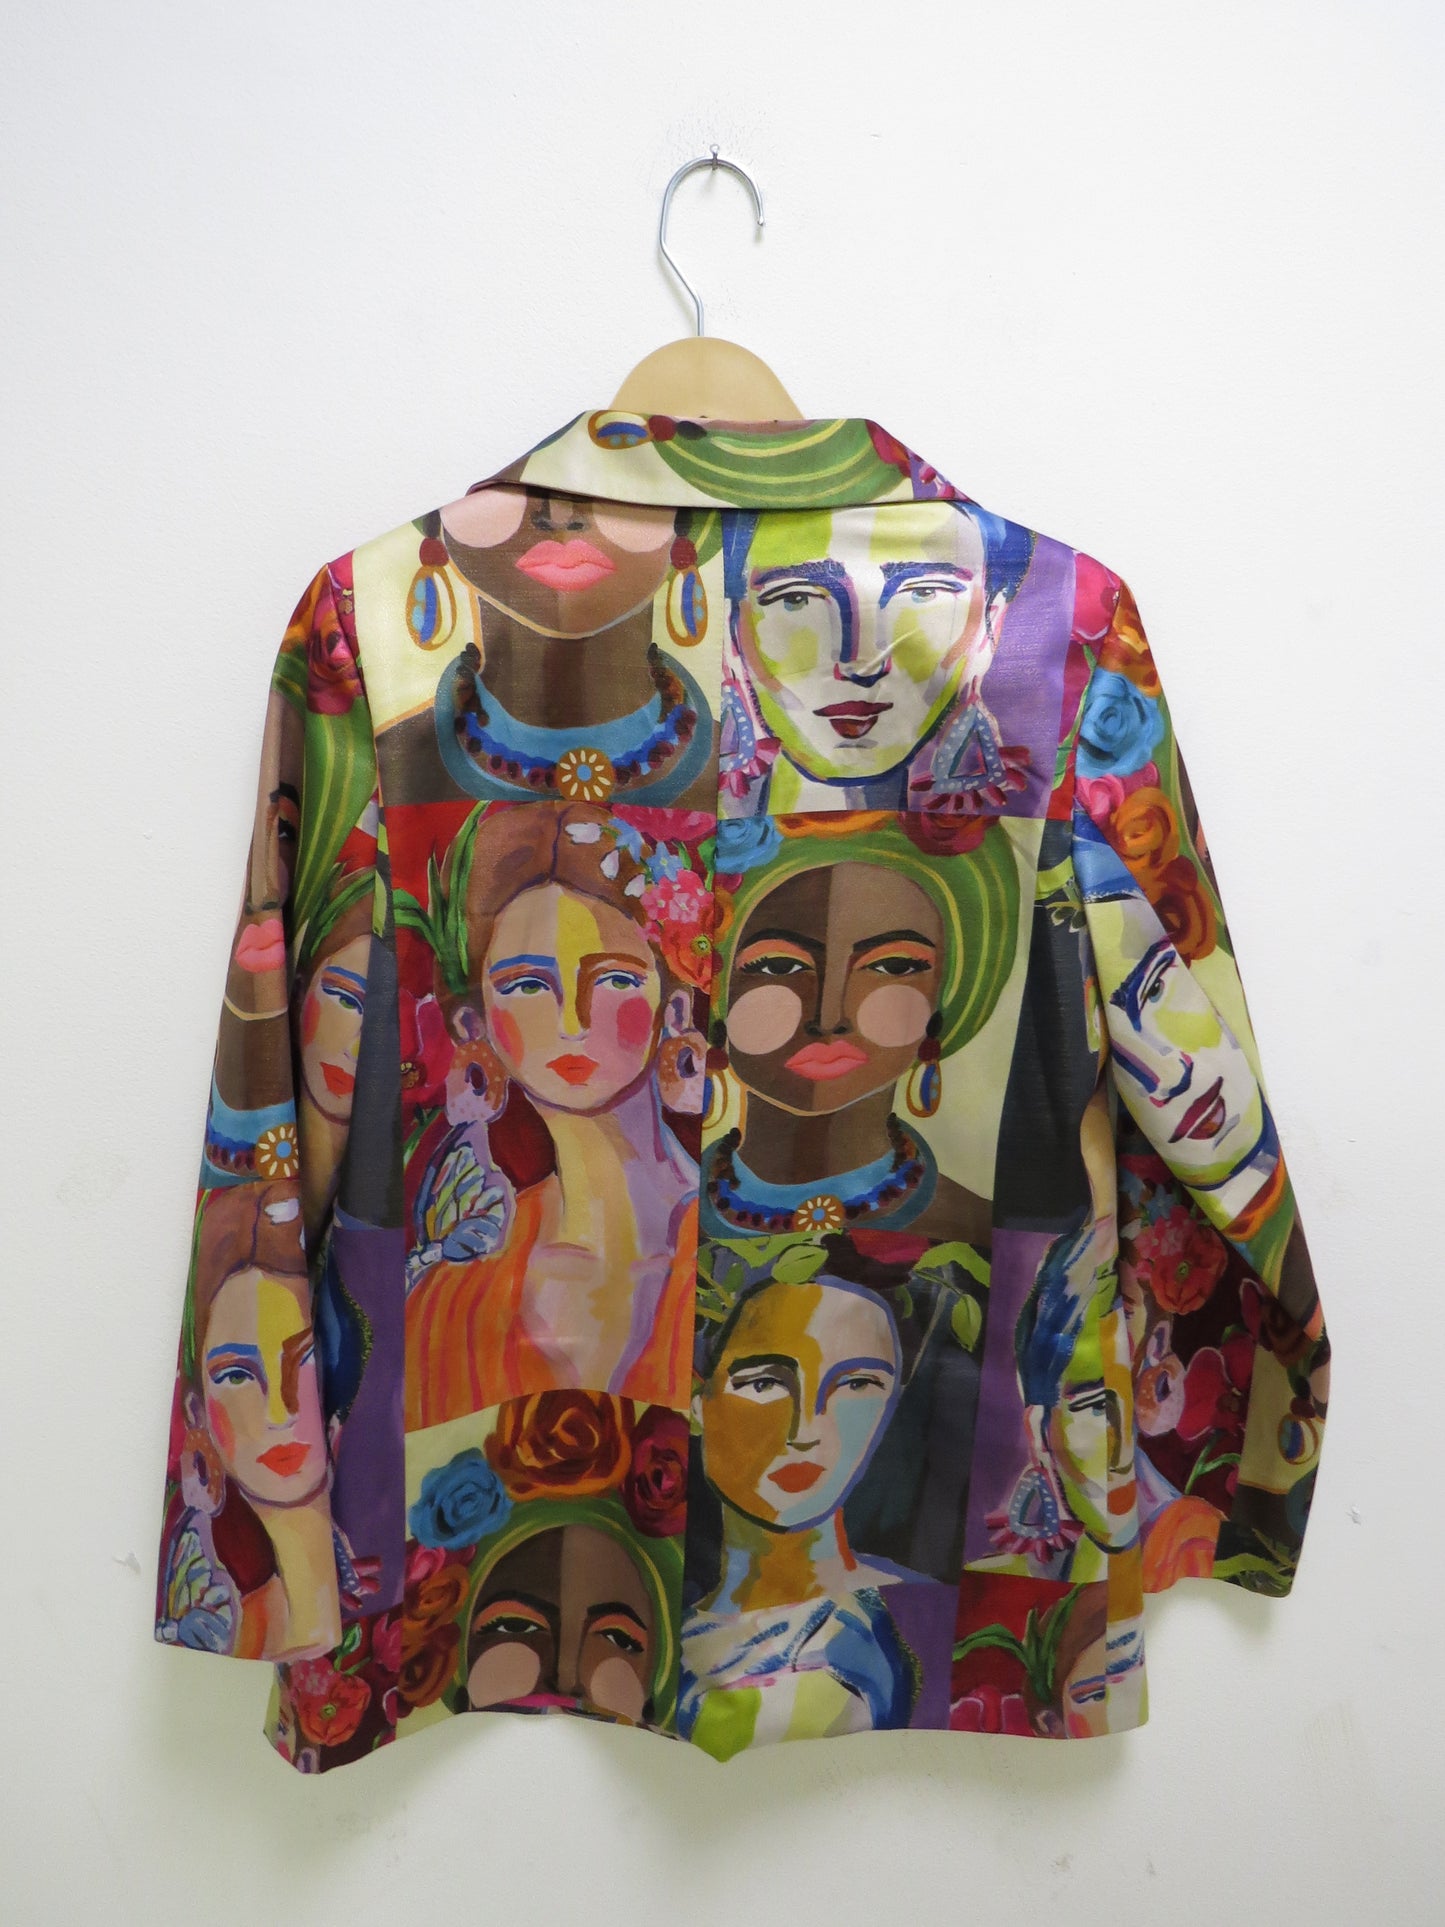 Frida coat